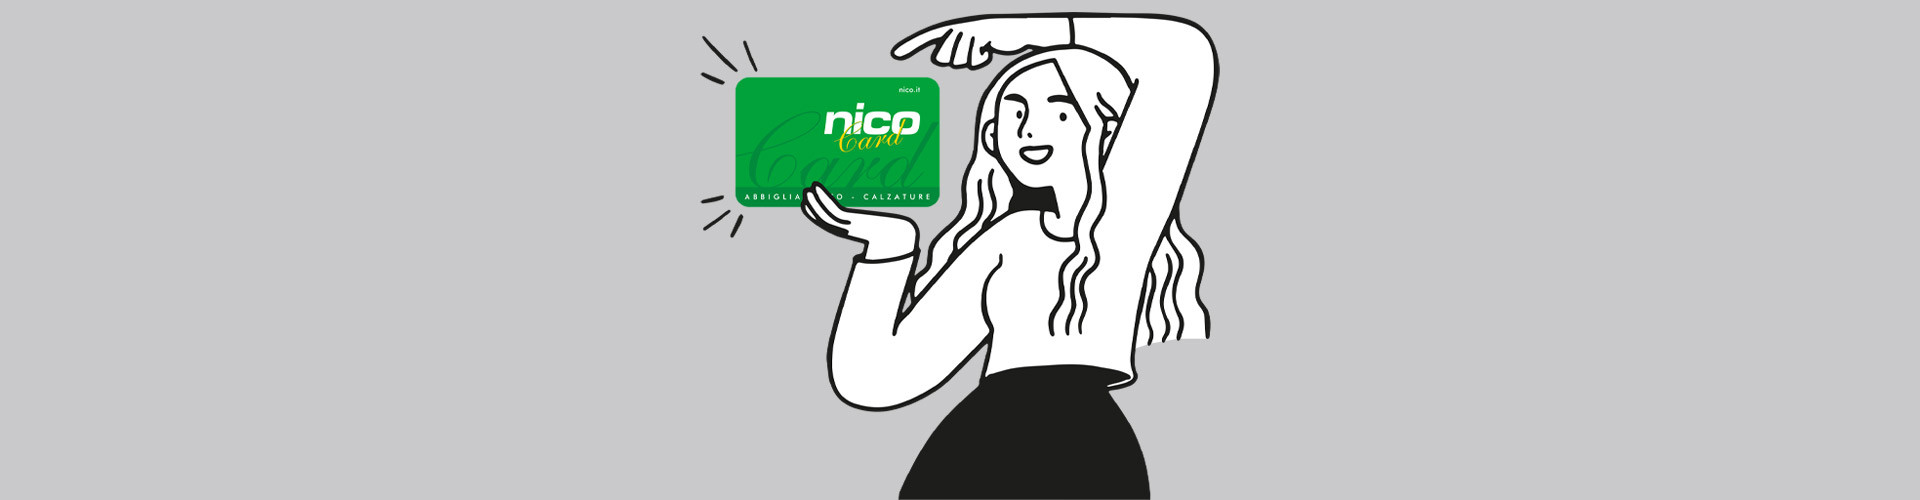 Nico-card.jpg